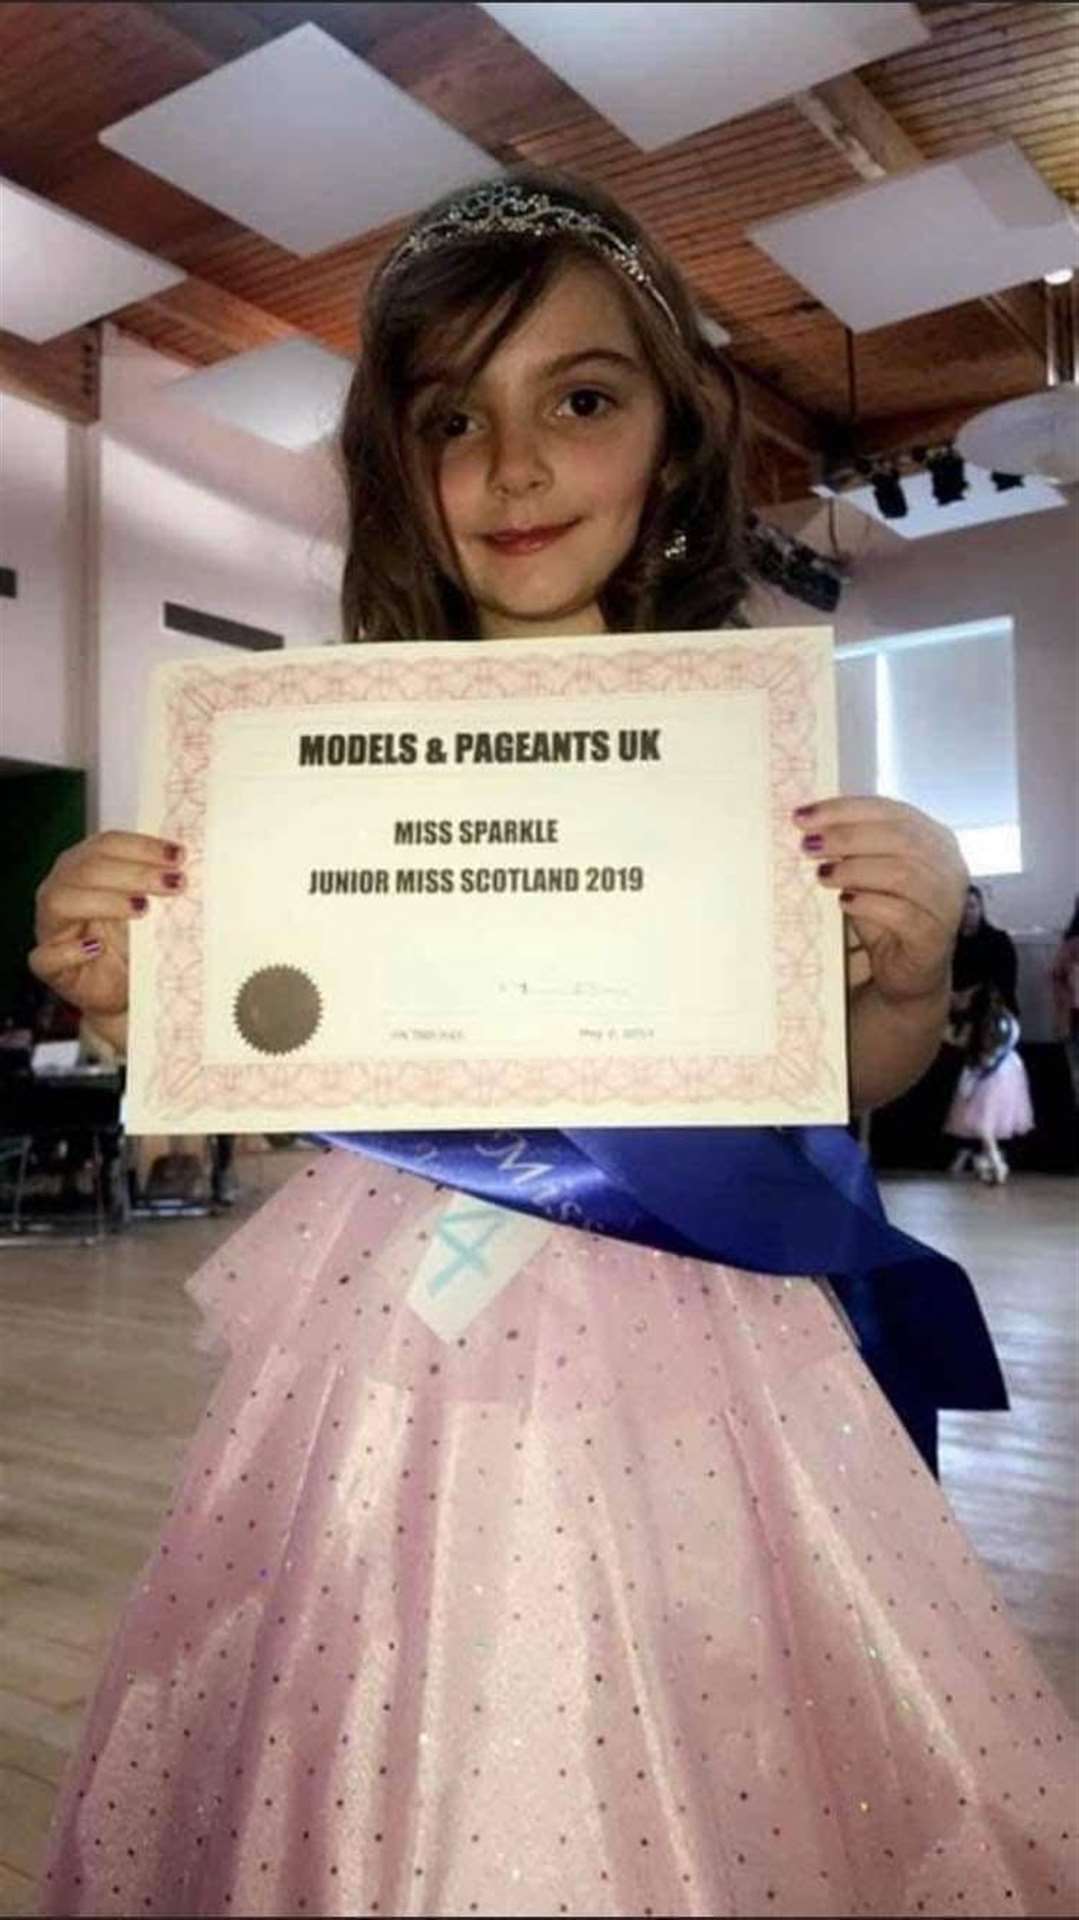 Violet-Rose Haggan won Miss Scotland's Little Miss Sparkle contest in 2019.